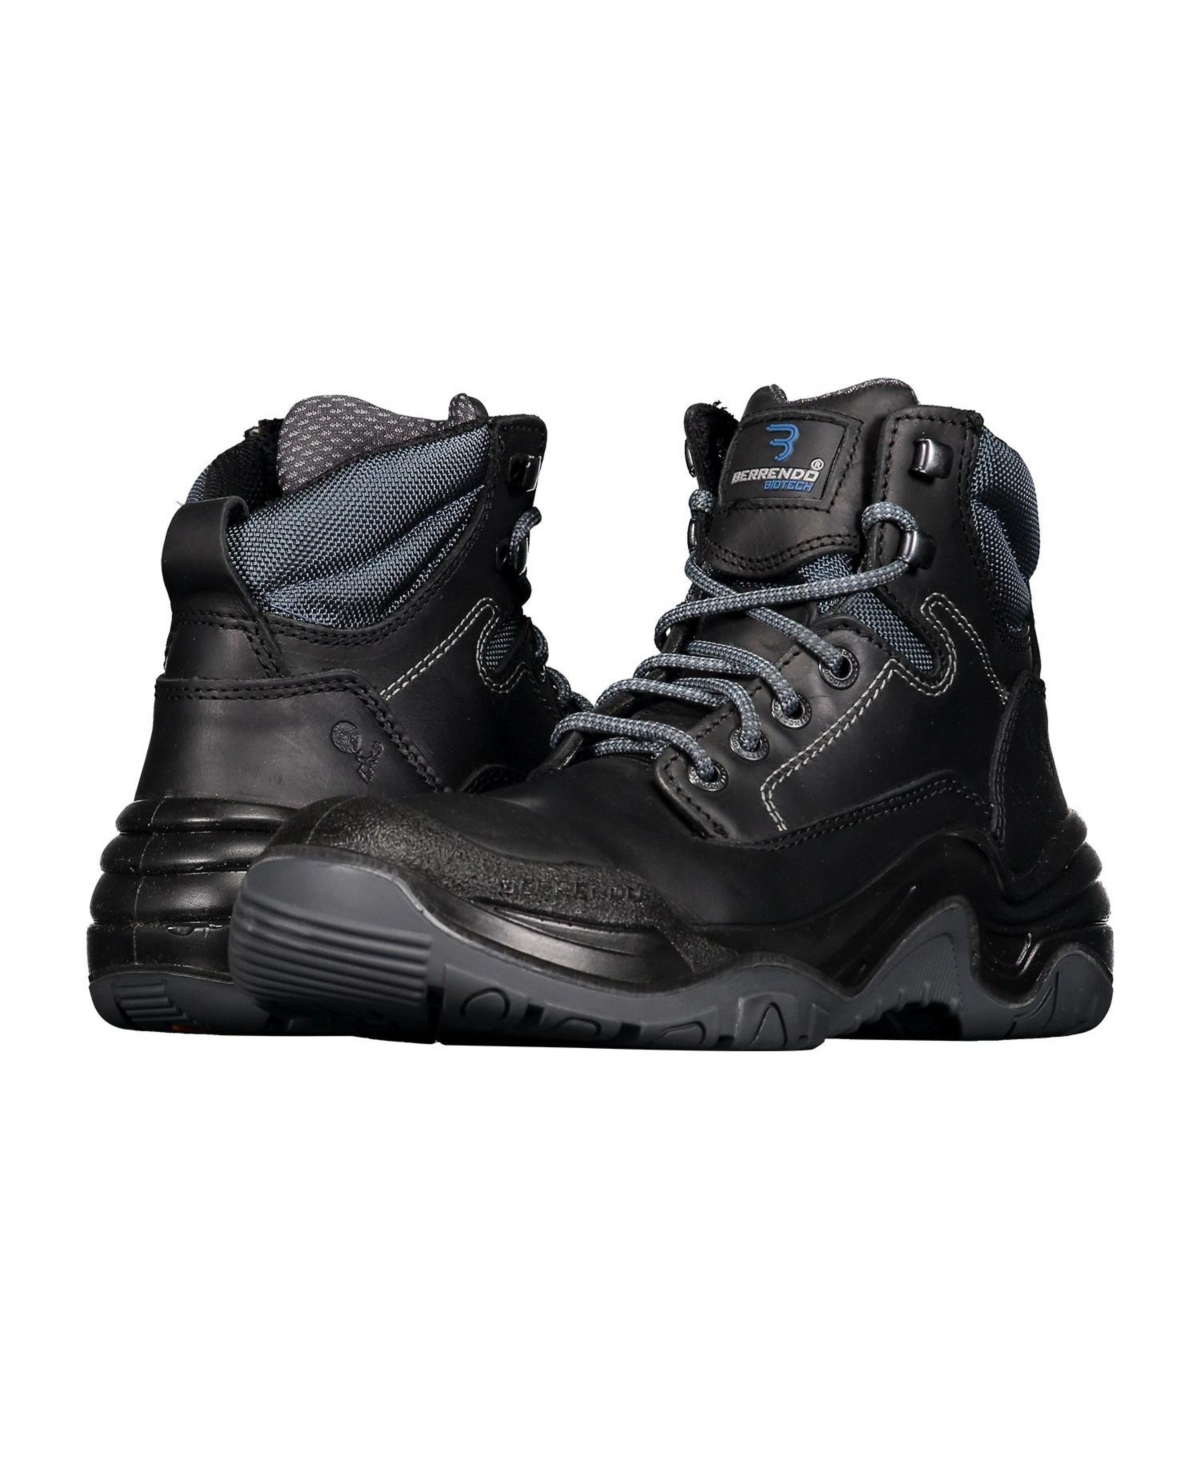 Men's Steel Toe Work Boots 6" - Oil and Slip Resistant - Eh Rated - Sierra